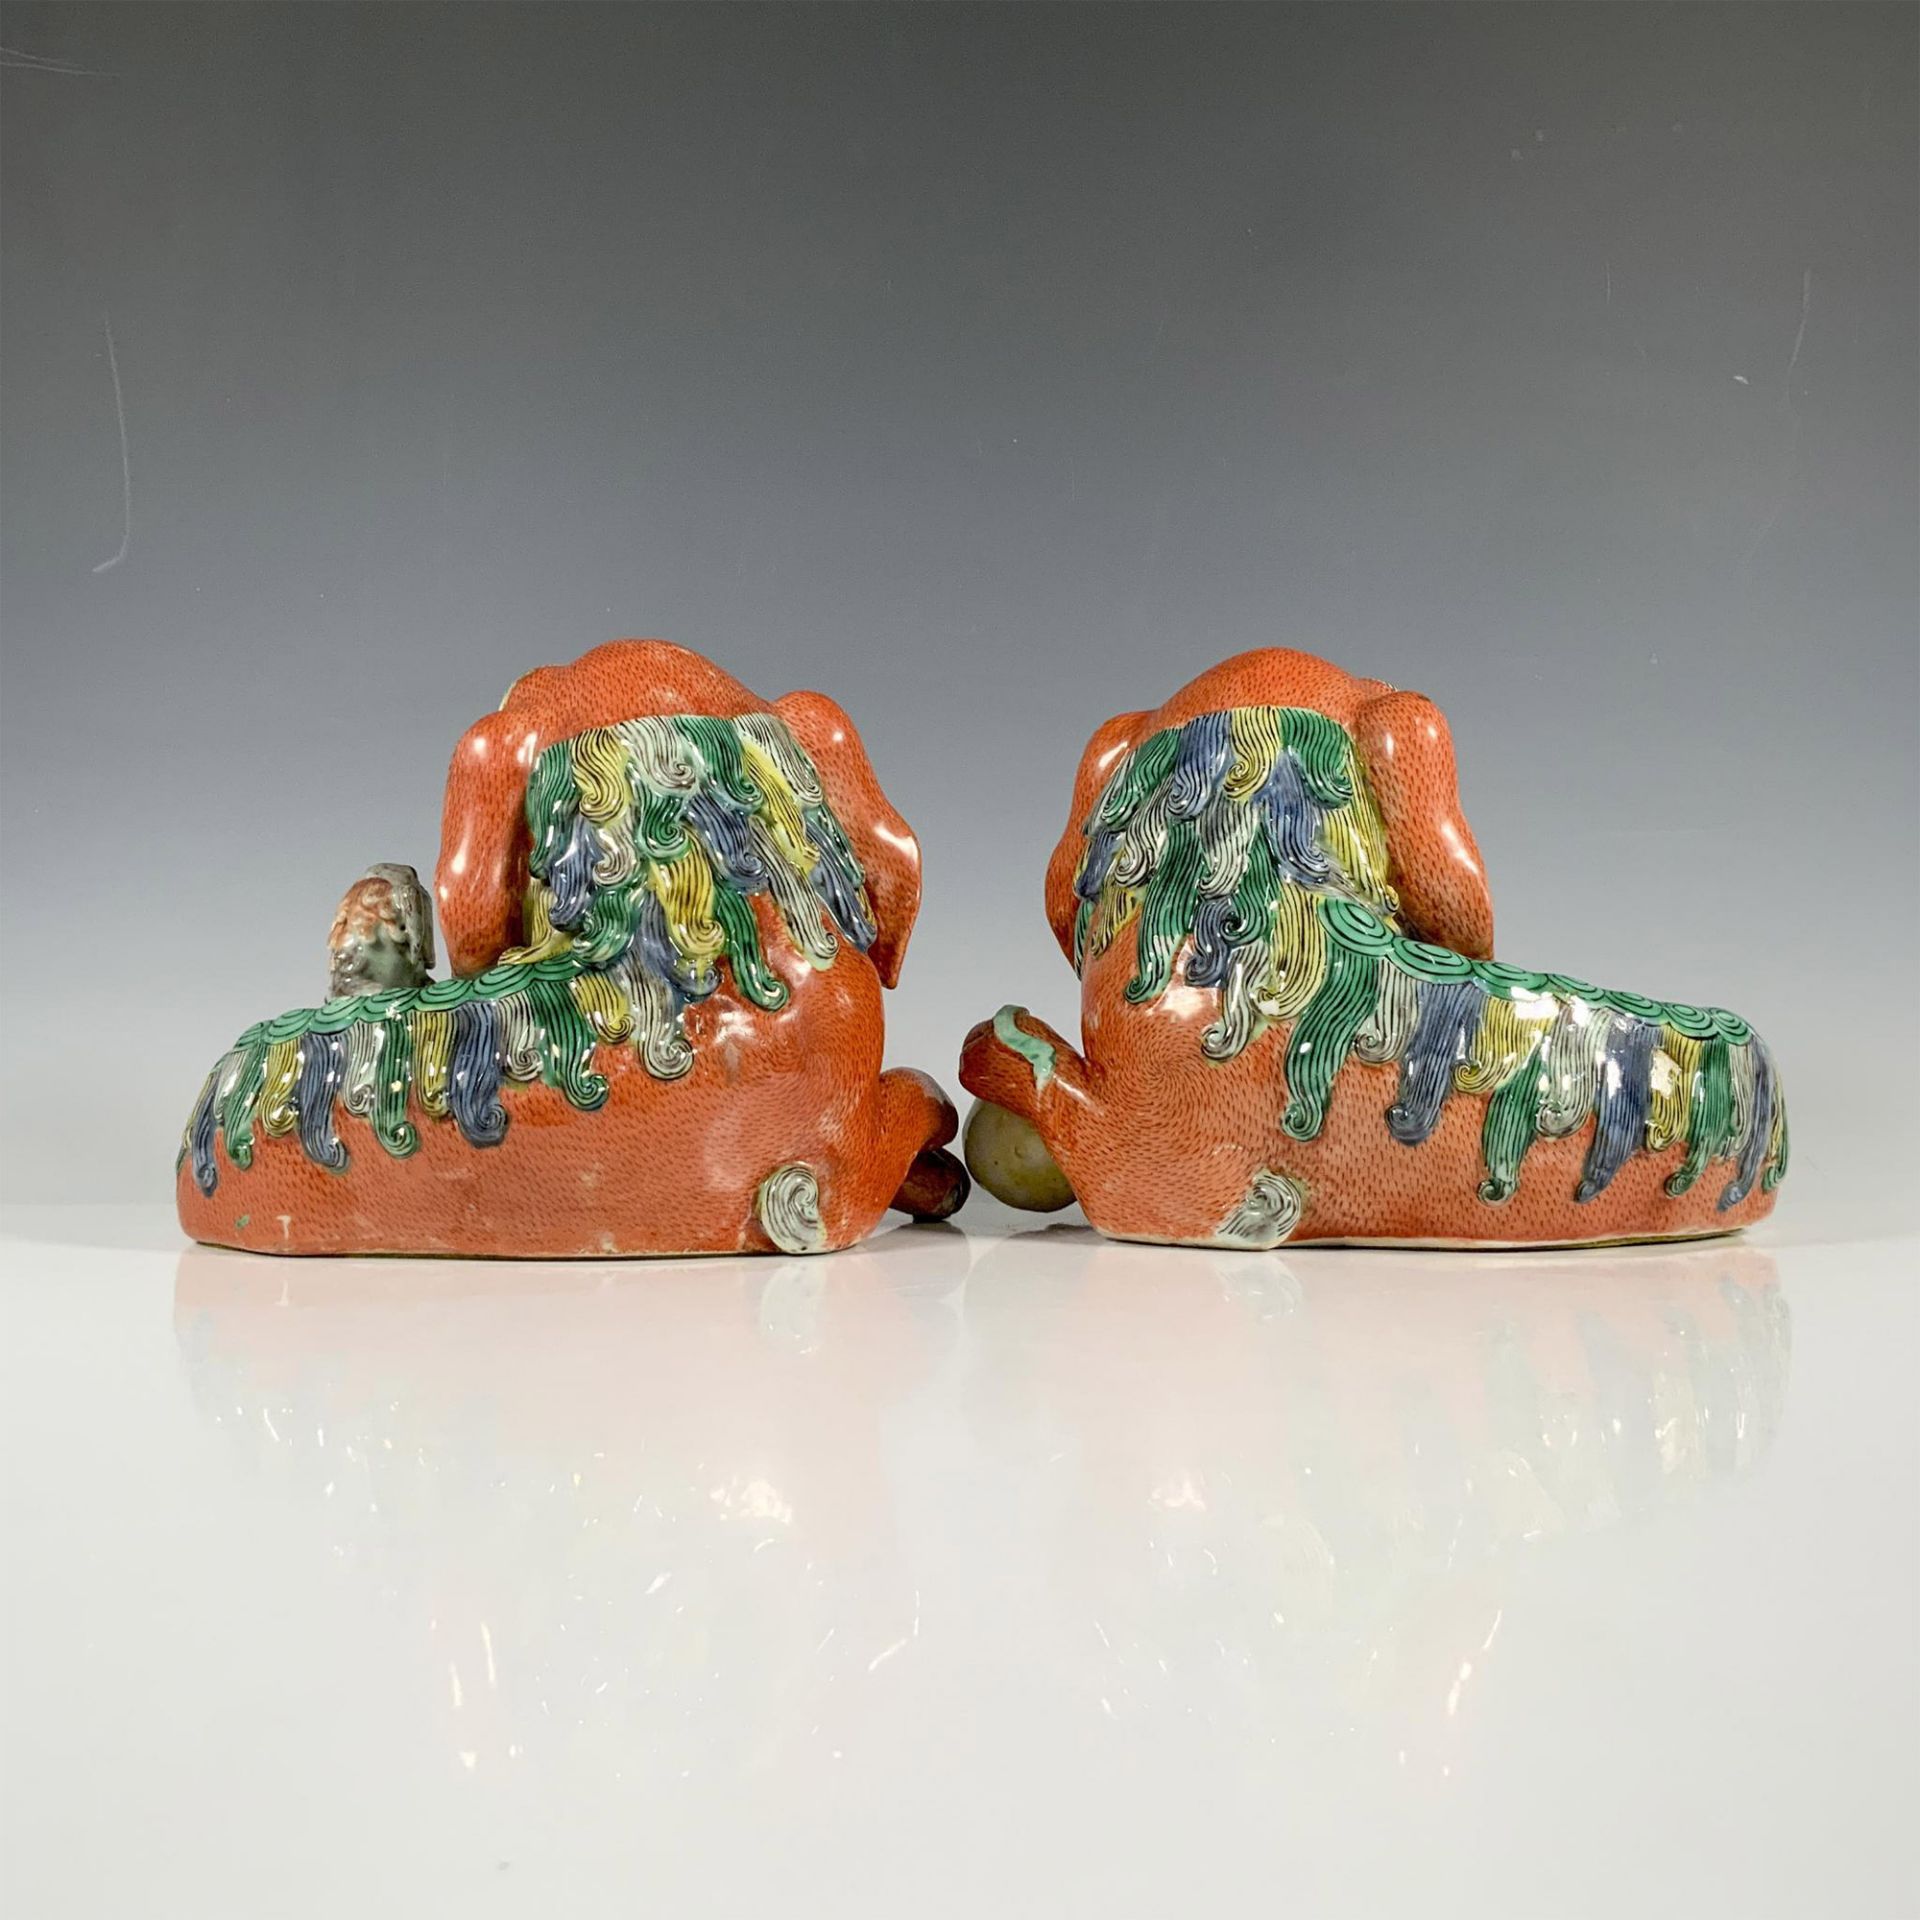 Pair of 19th Century Chinese Ceramic Foo Dog Figurines - Image 2 of 3